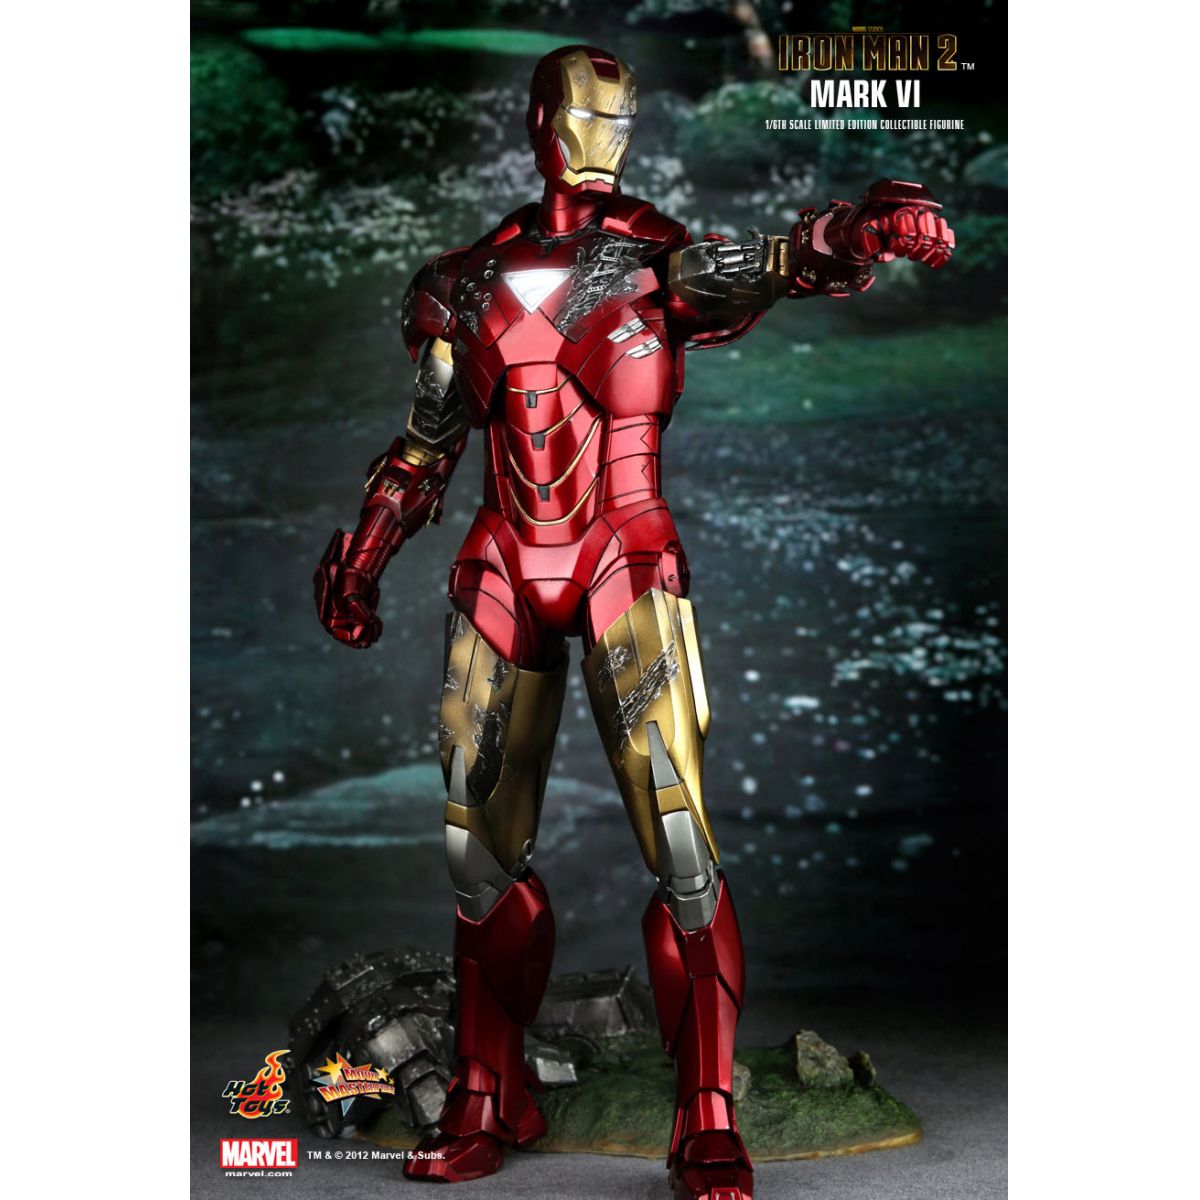 Action Figure Homem de Ferro (Iron Man) Mark VI: Homem de Ferro 2 (Iron Man 2) MMS132 (Escala 1/6) - Hot Toys - CDL